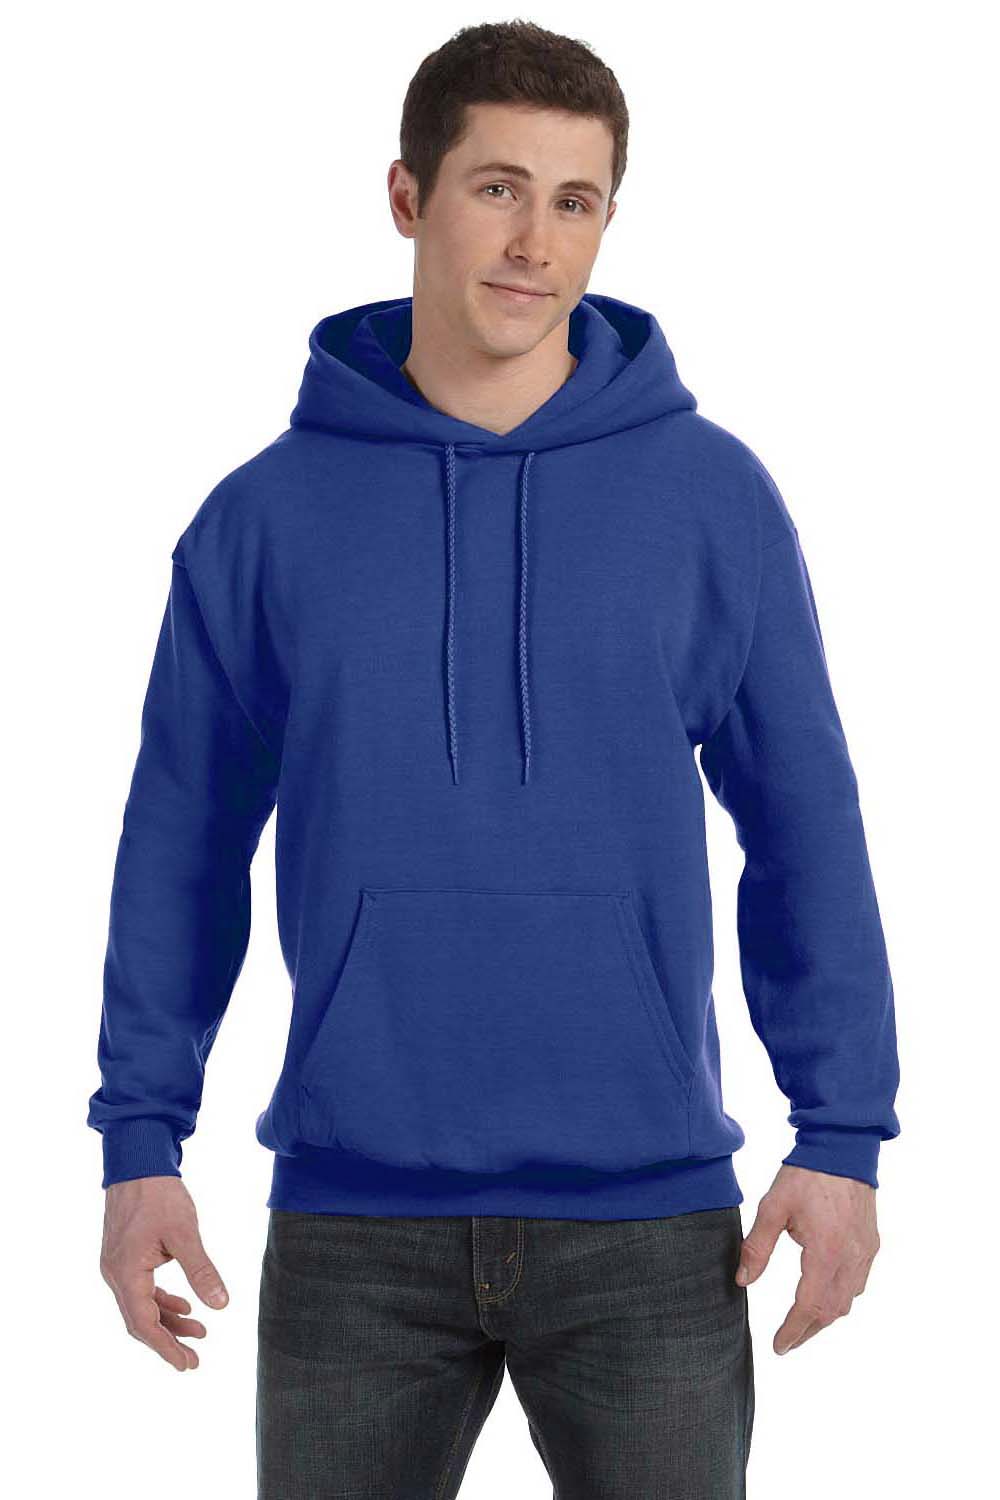 Hanes P170 Mens EcoSmart Print Pro XP Hooded Sweatshirt Hoodie Royal Blue Front